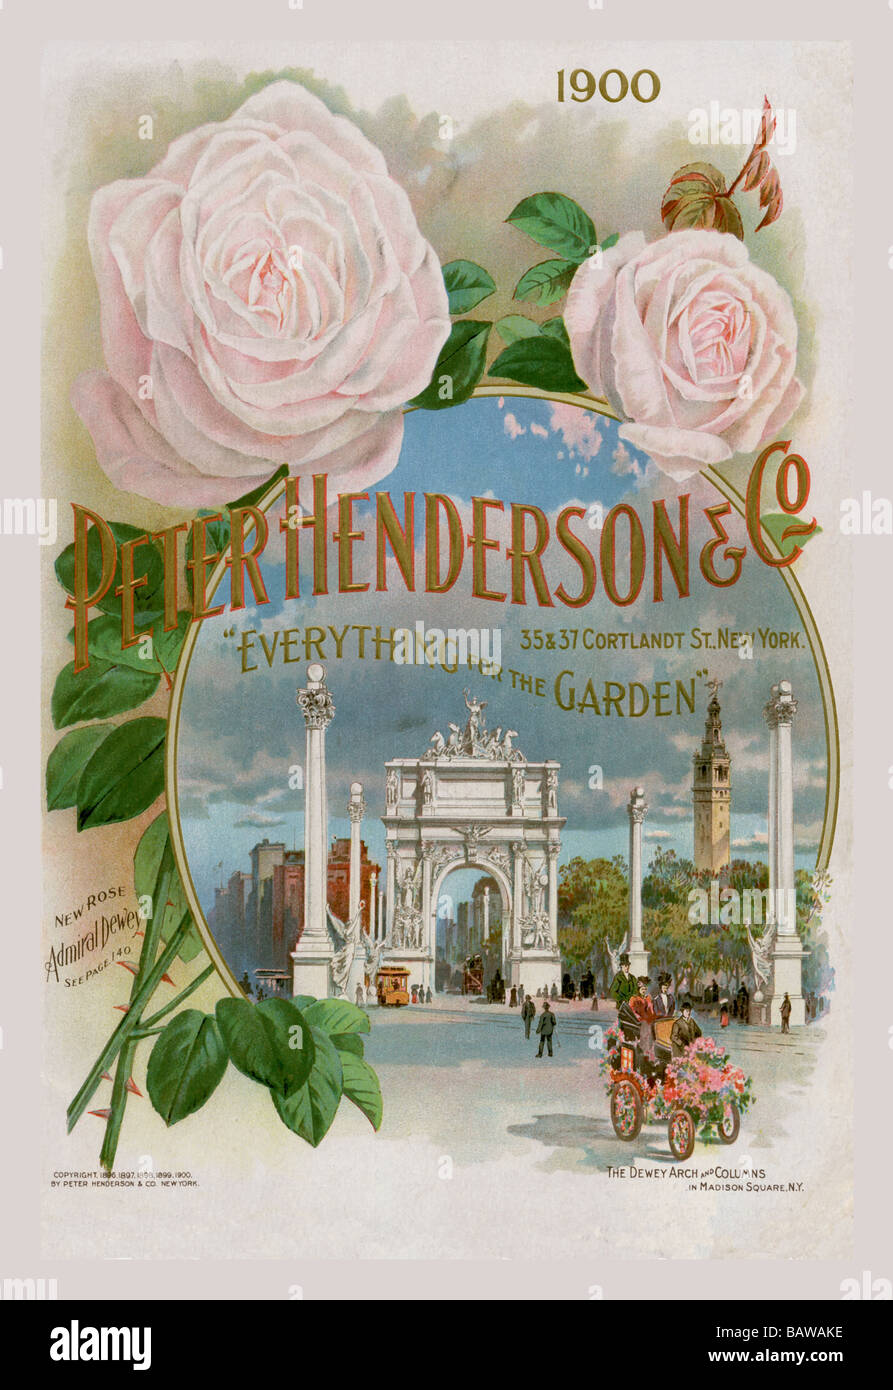 1902 Peter Henderson Garden Catalog Cover ROSES Victorian Girl Antique ART PRINT 